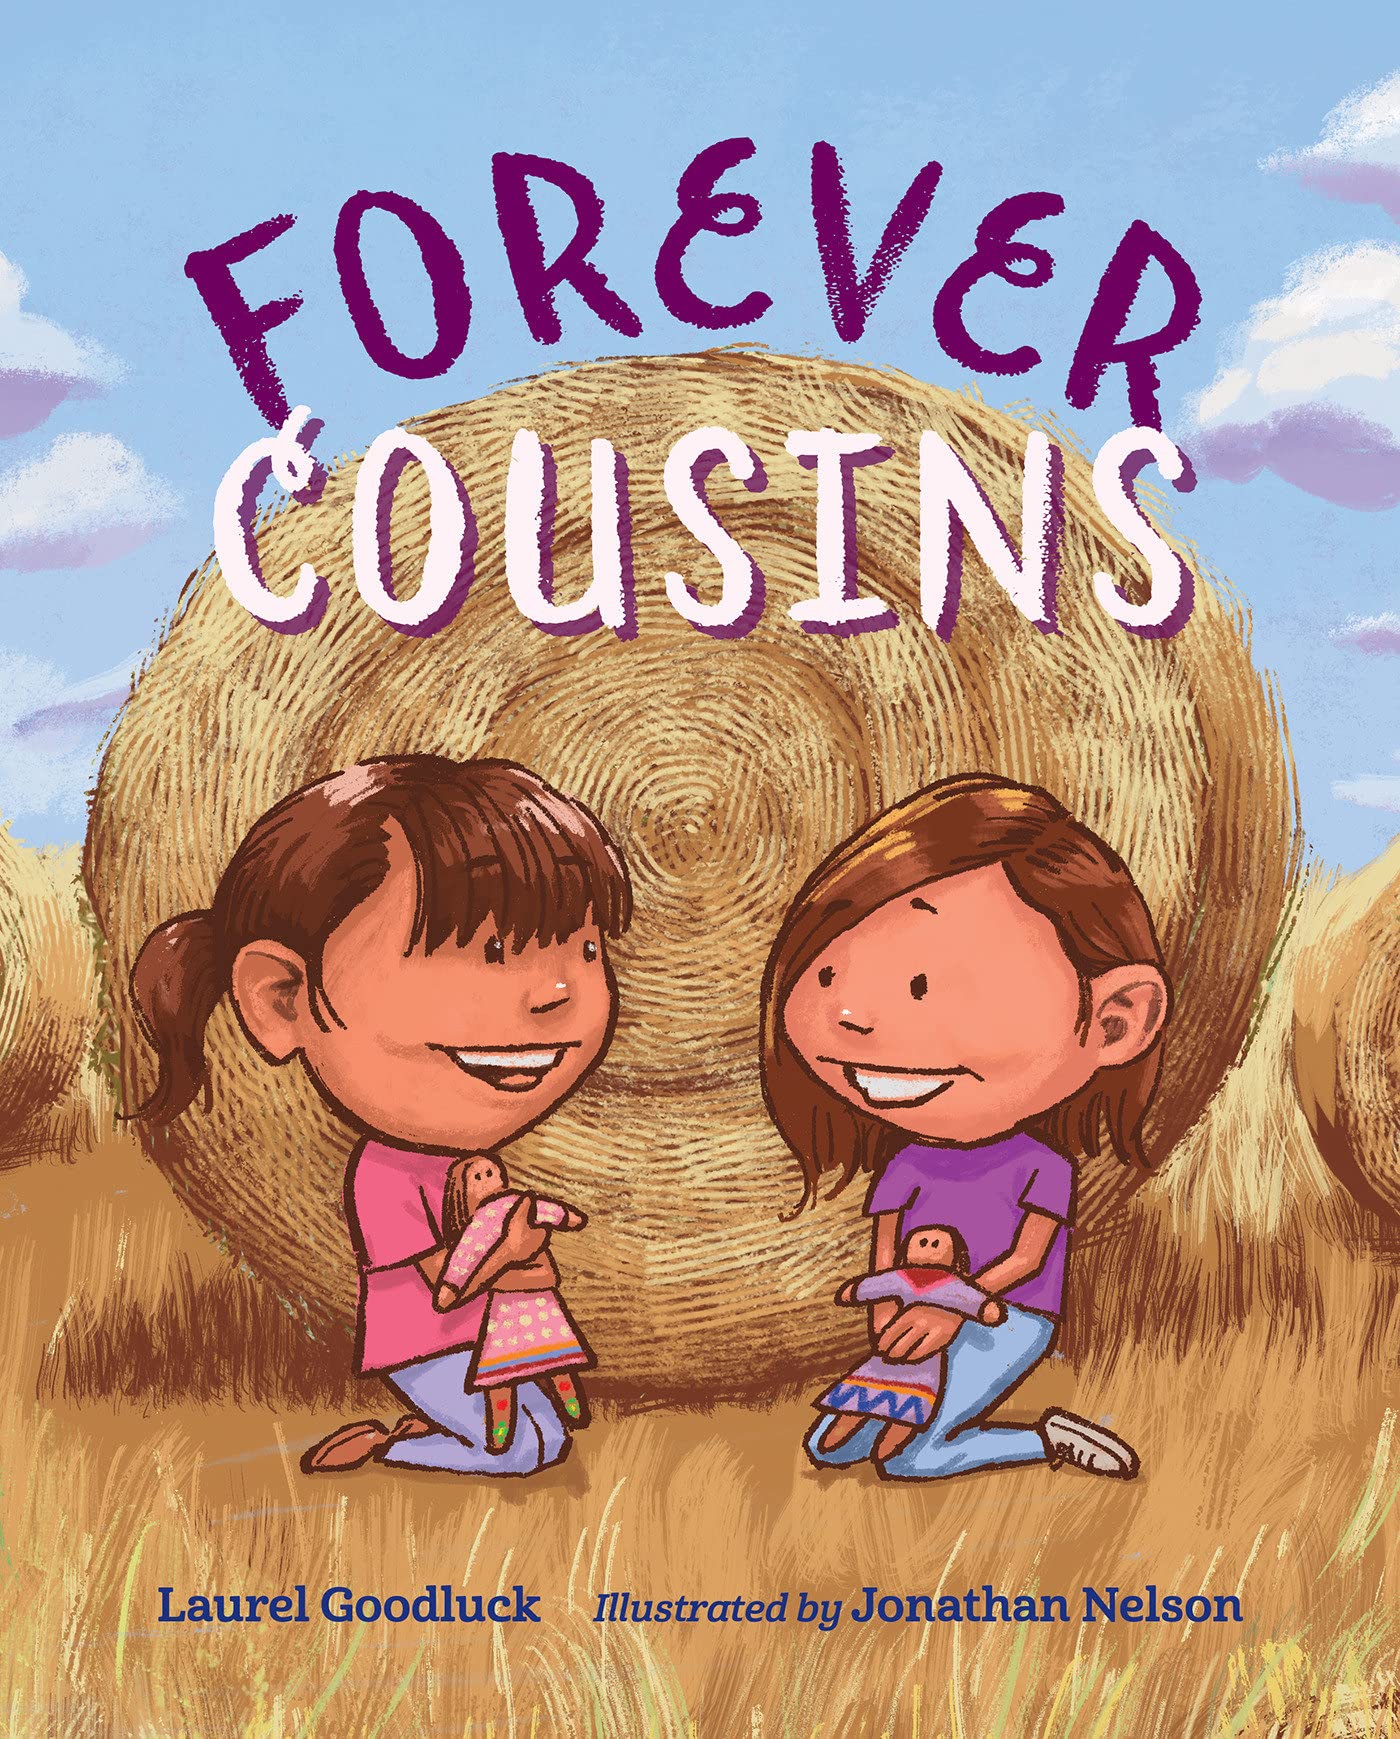 Forever Cousins